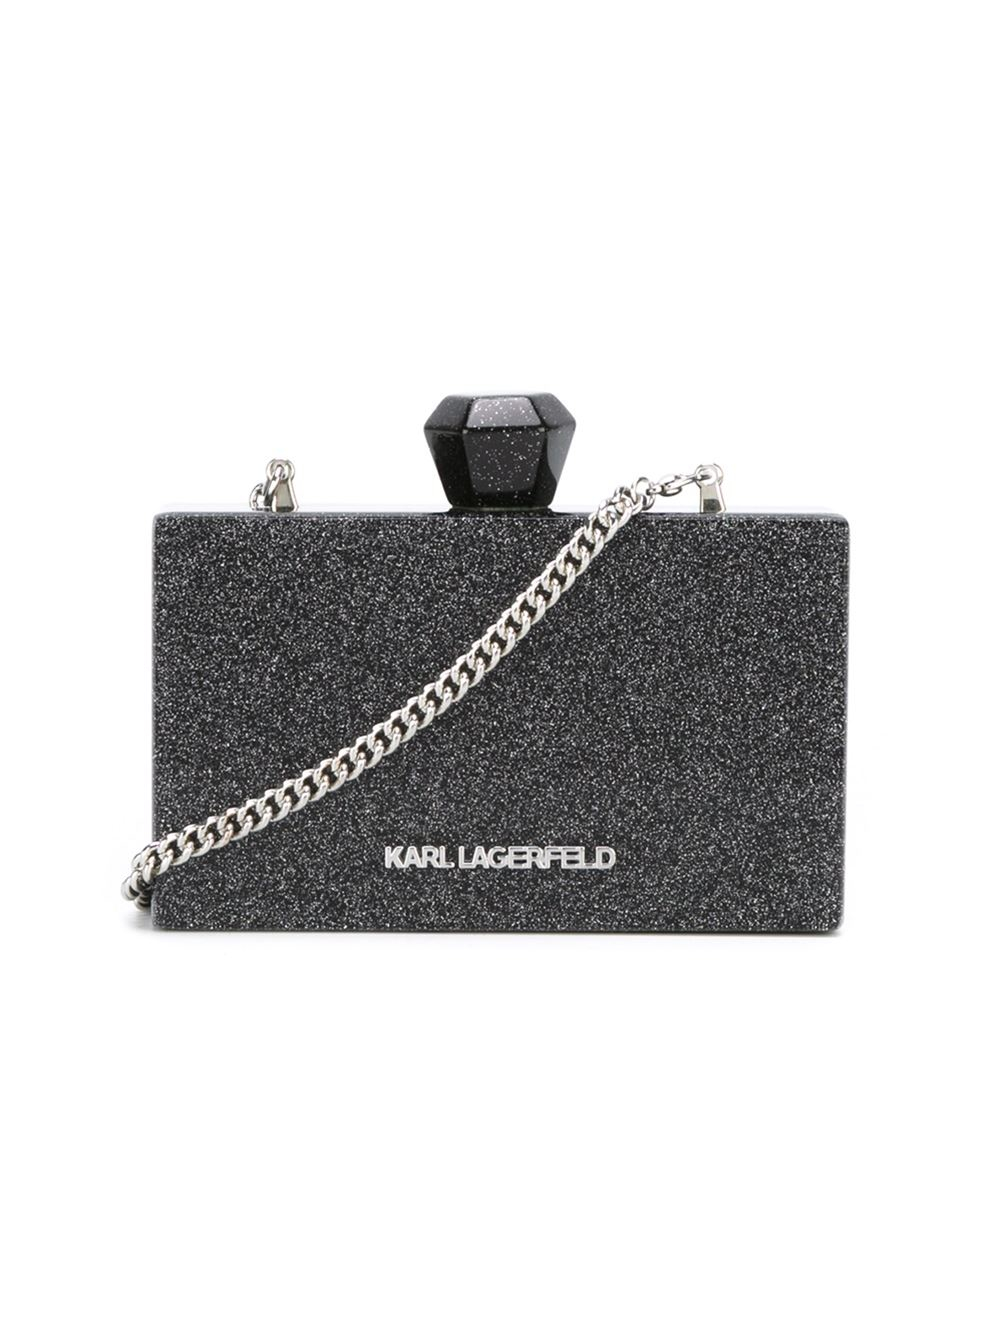 Karl Lagerfeld 'luxury Is A Discipline' Box Clutch in Black | Lyst